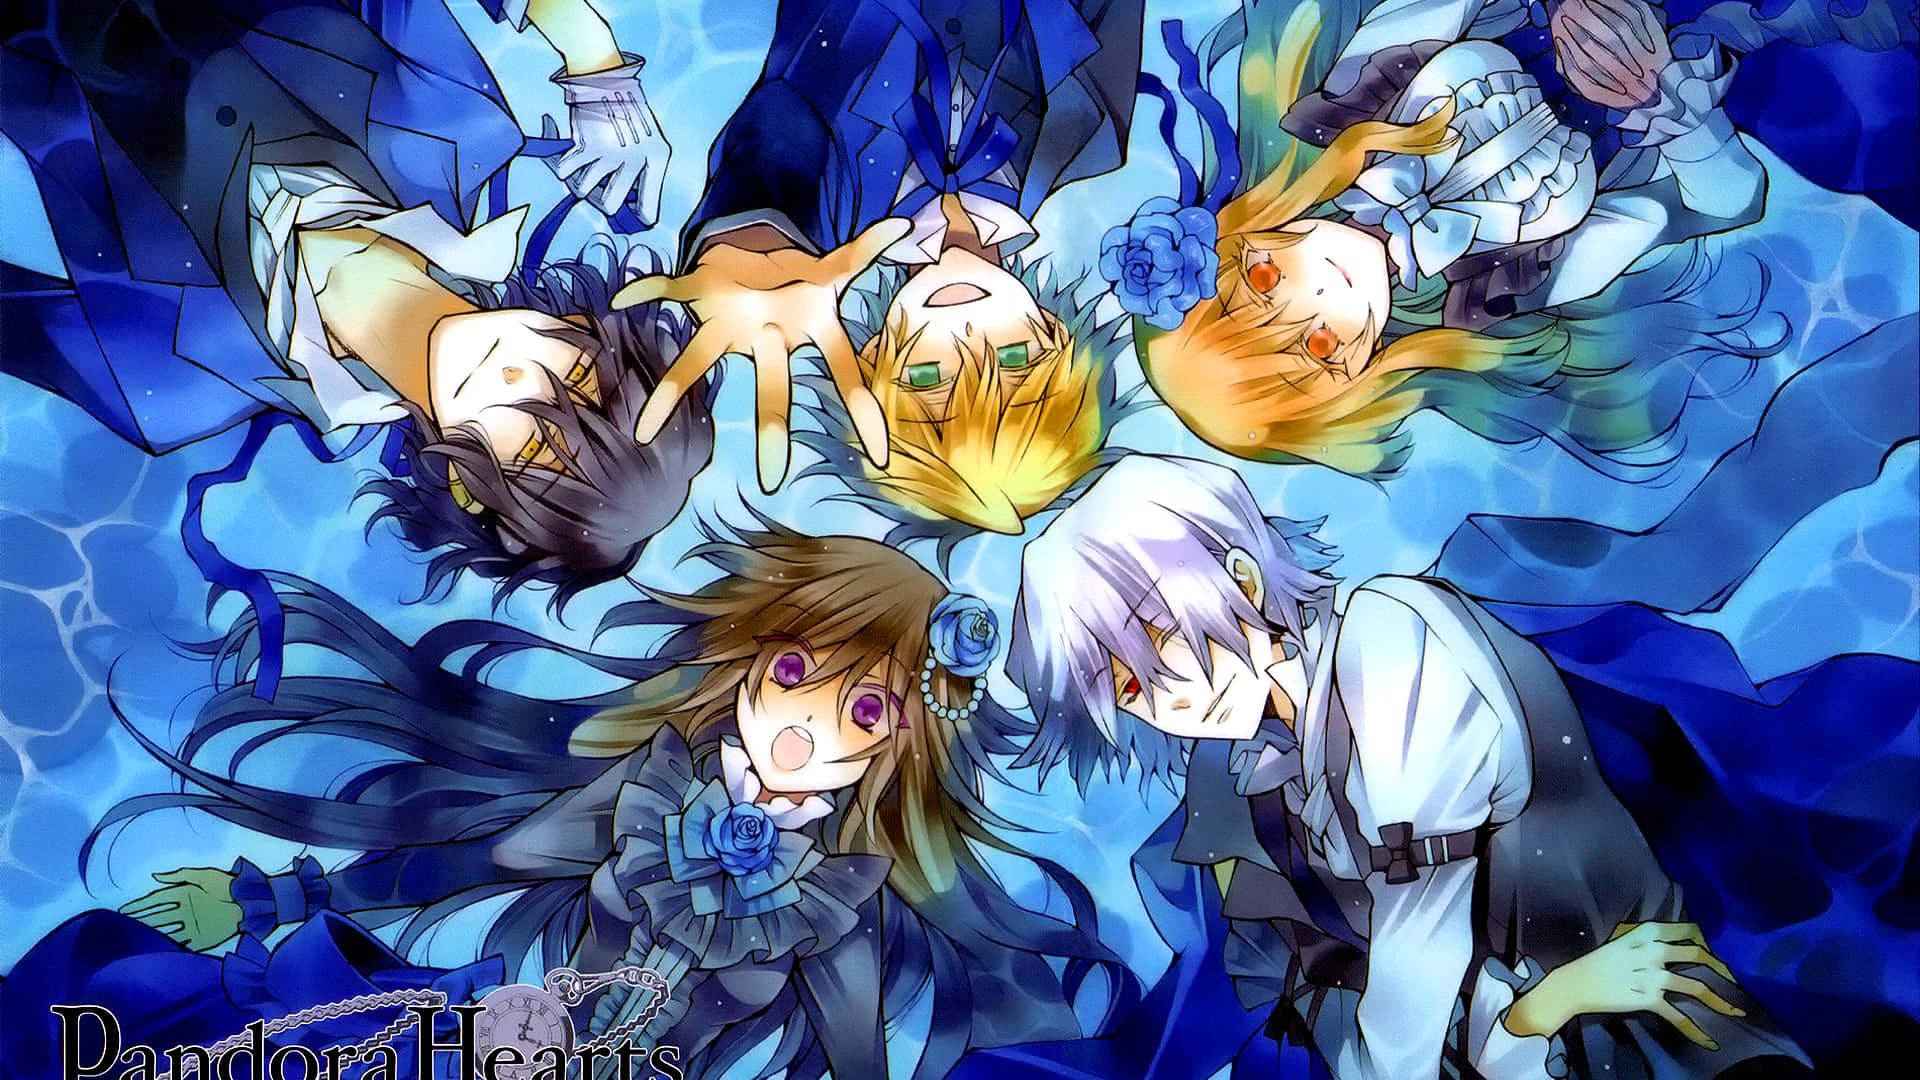 Pandora Hearts Anime Group Wallpaper